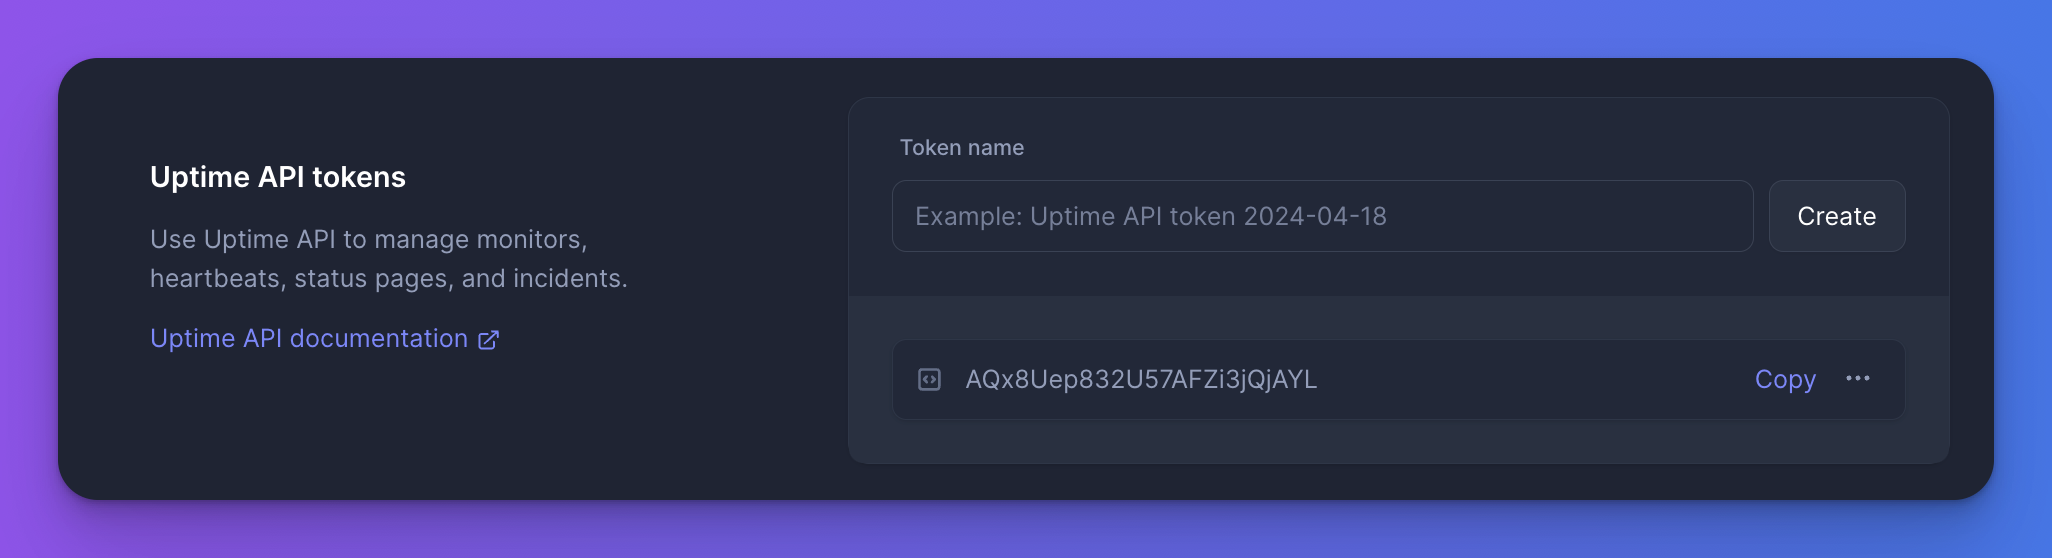 Screenshot of Uptime API tokens